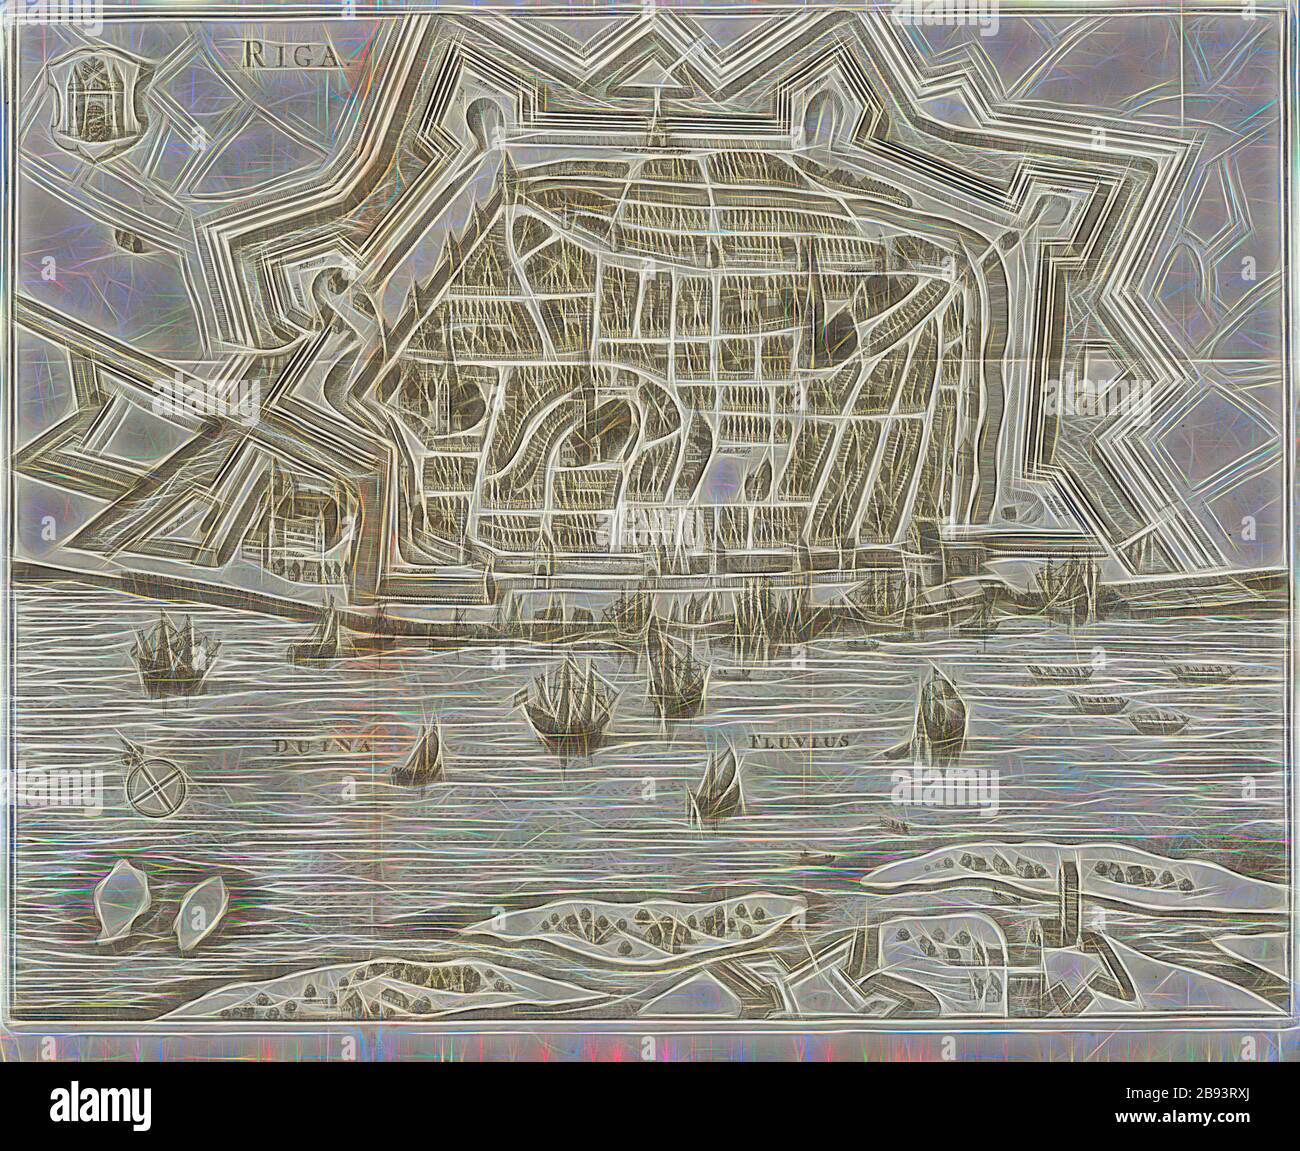 Riga, Map view of Riga, Latvia, including the 18th century Duna, Fig. 2,  according to p. 8, 1727, Adam Olearius: Voyages très-curieux et  très-renommez faits en Moscovie, Tartarie et Perse: dans lequels